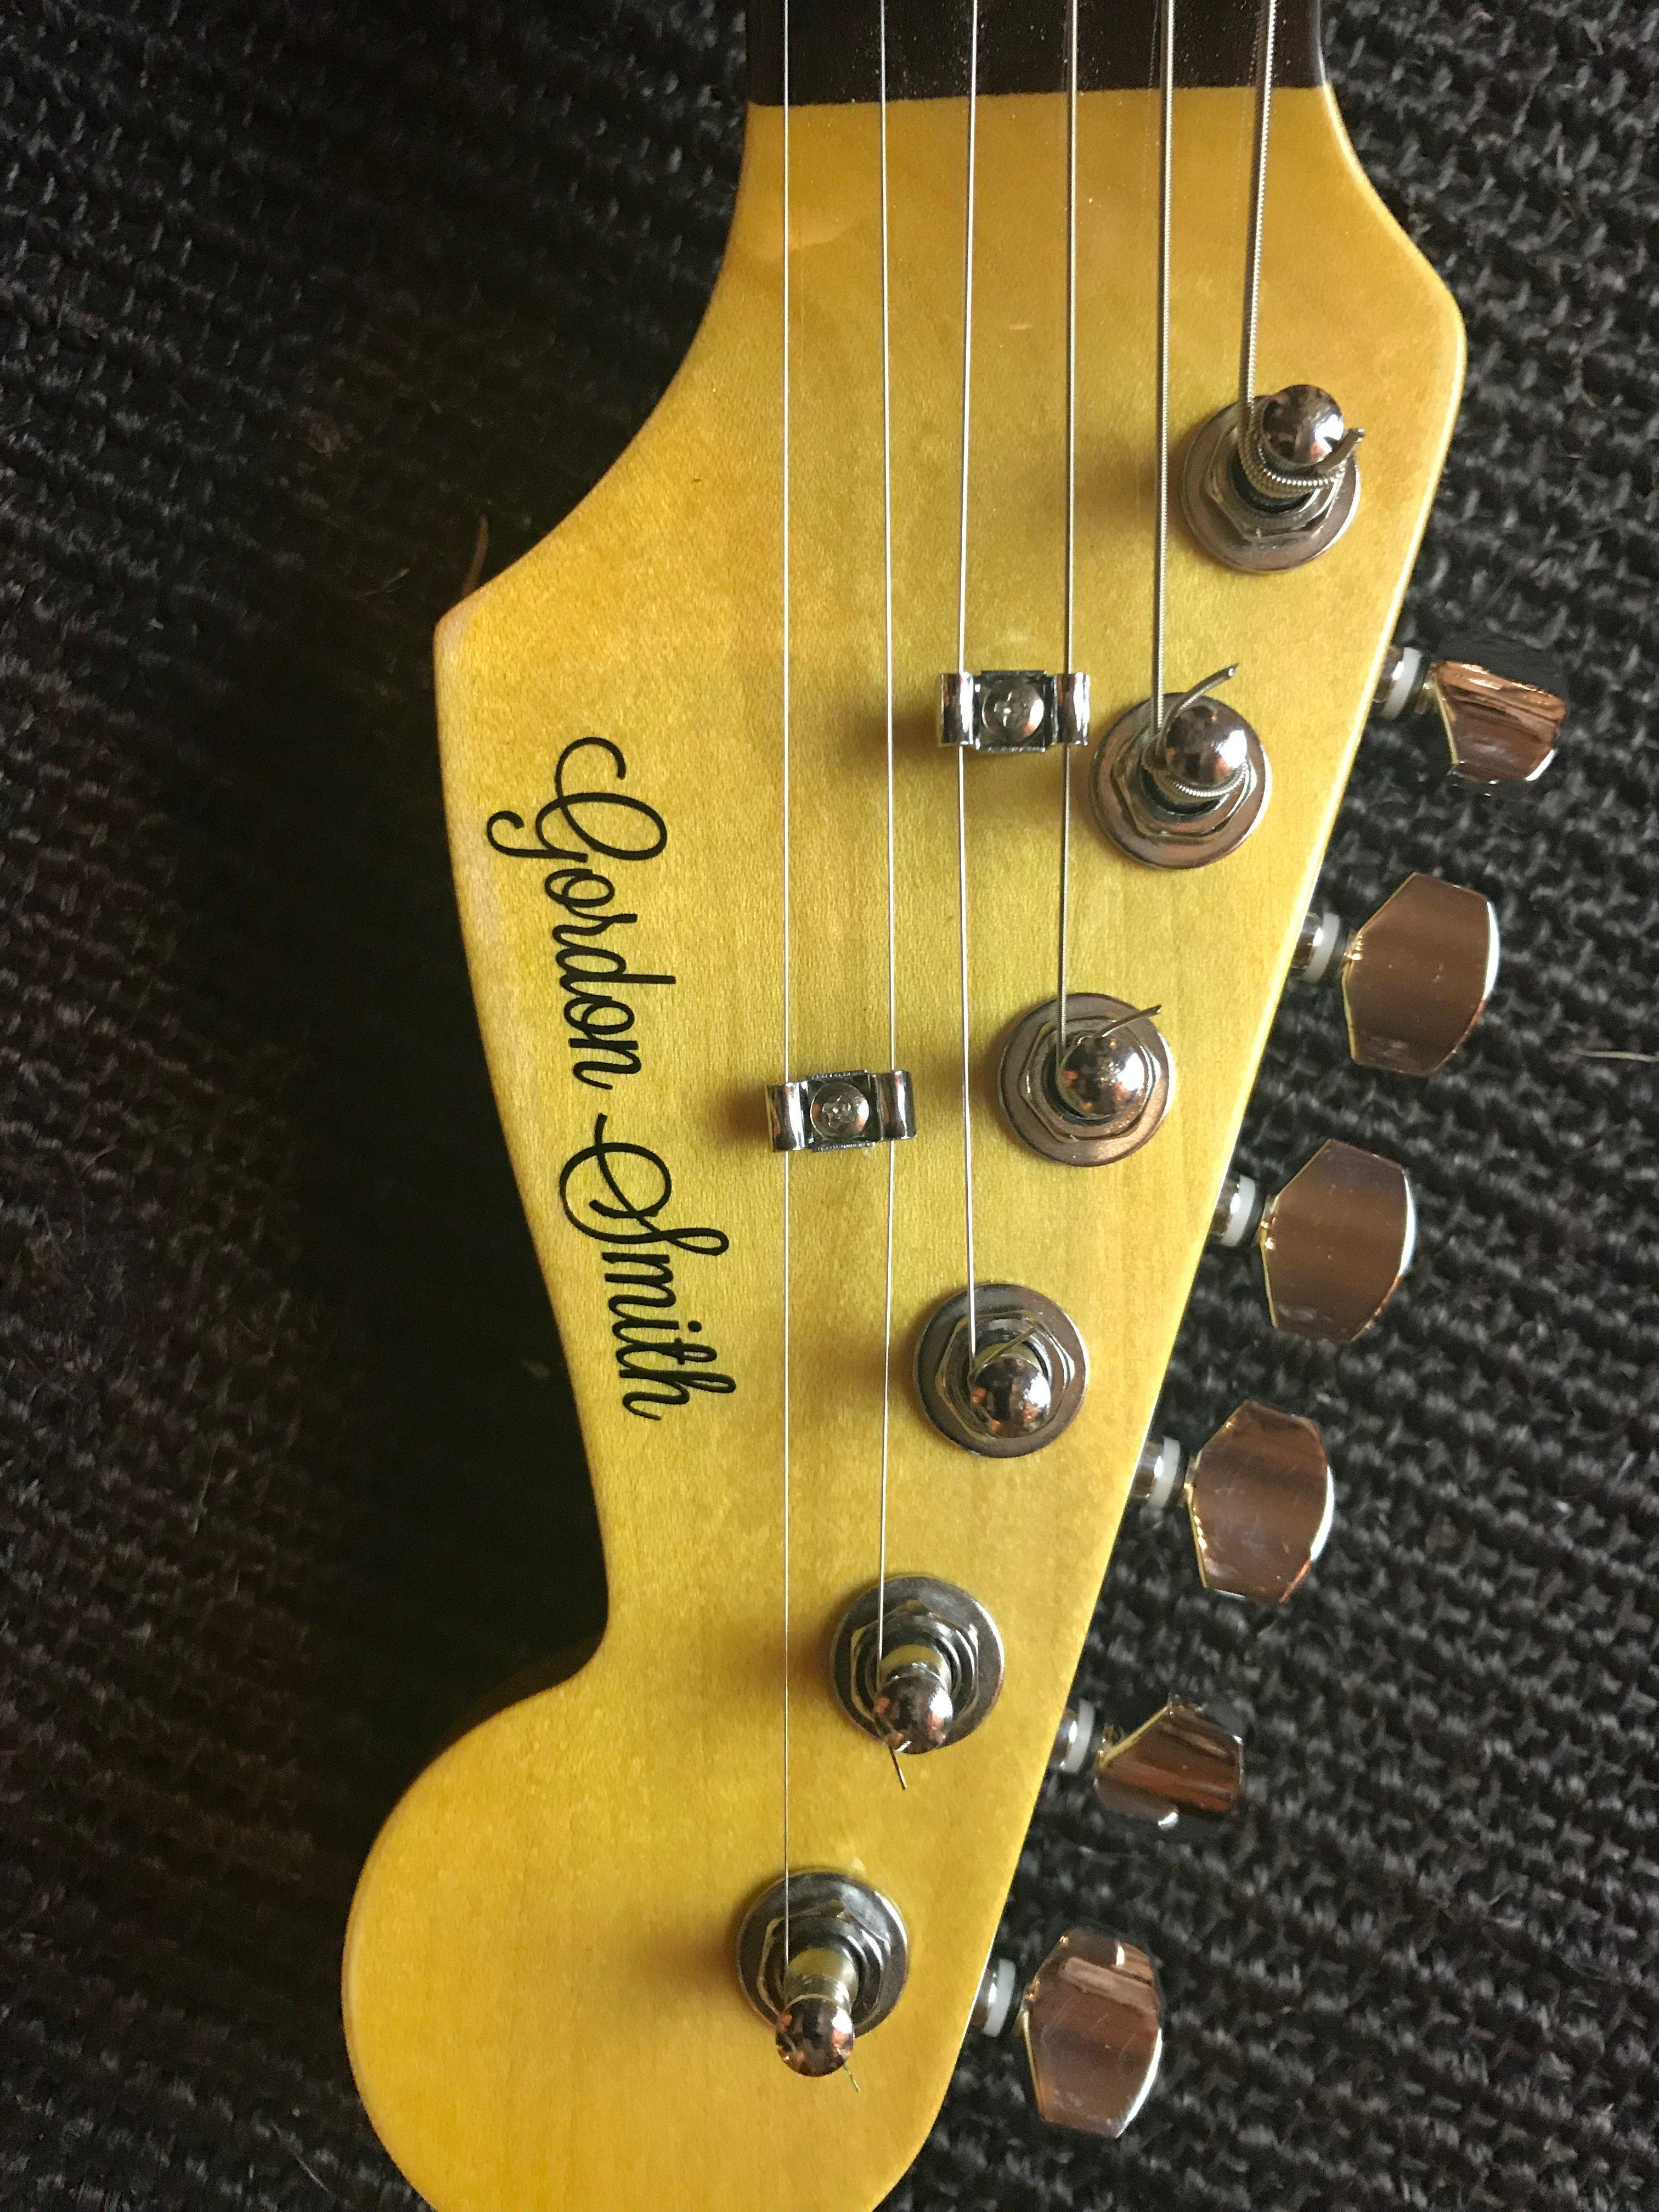 Gordon Smith Classic S HSS Custom, Electric Guitar for sale at Richards Guitars.